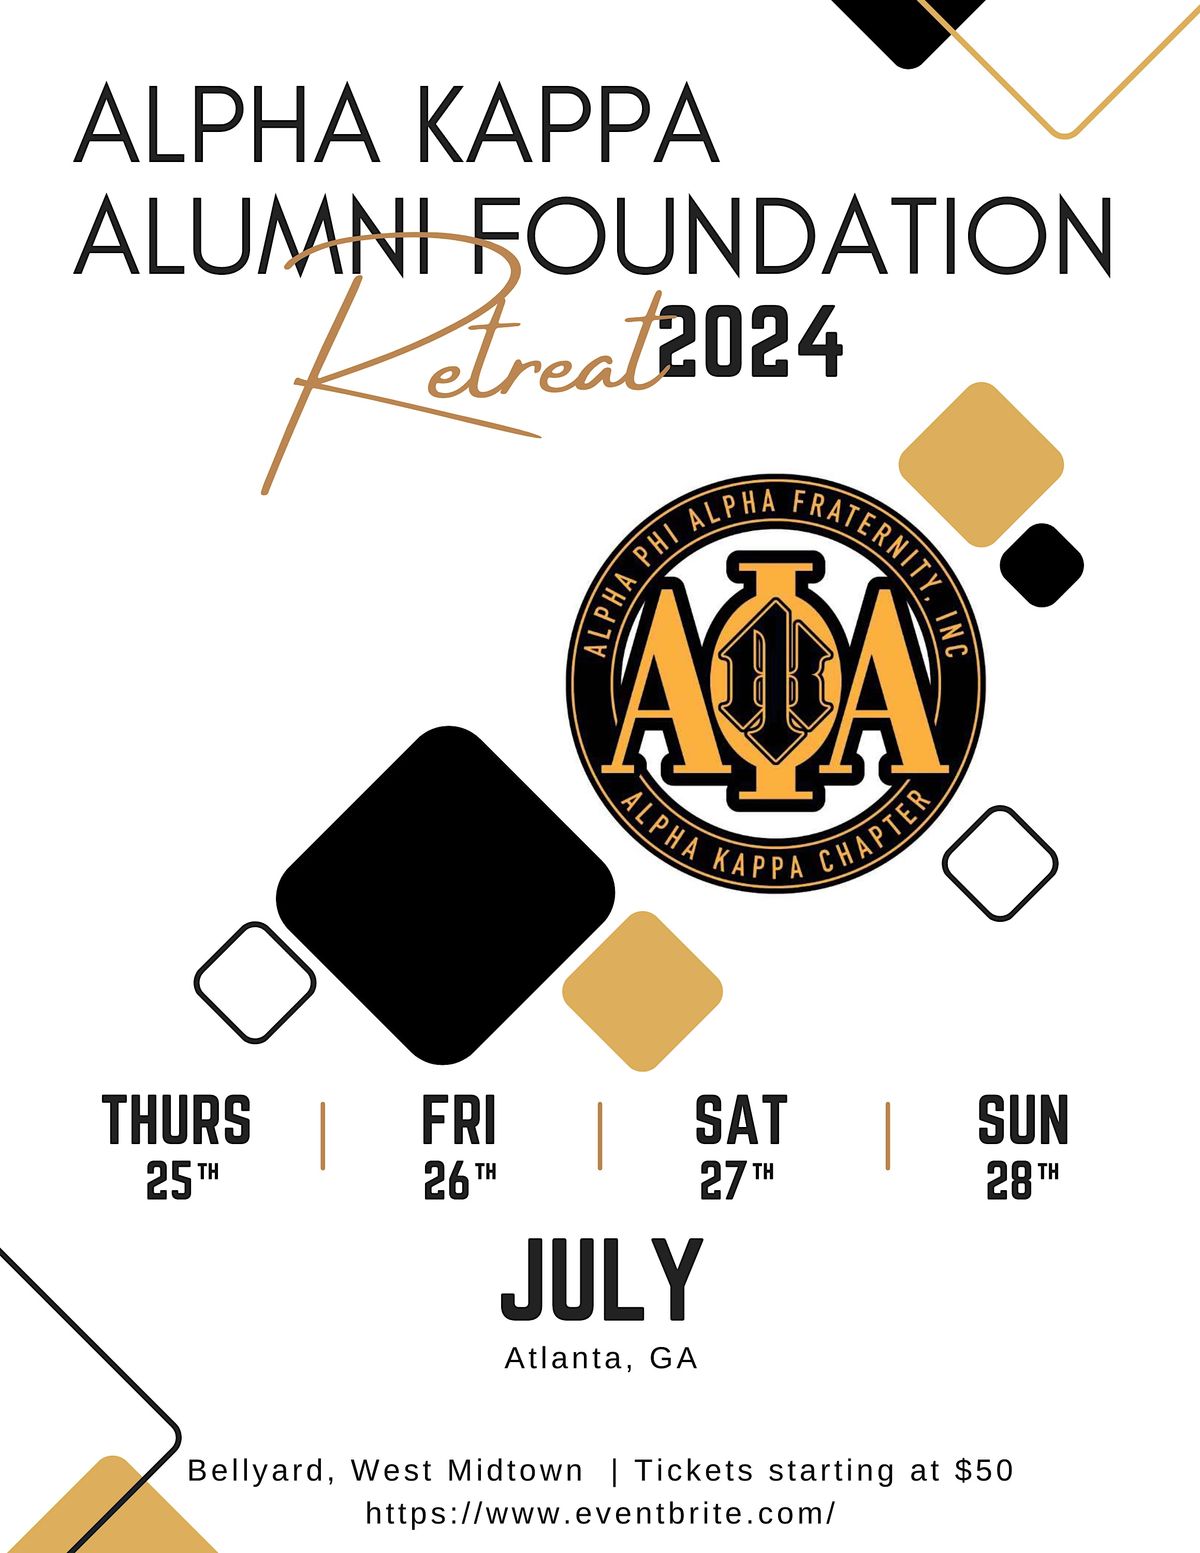 Alpha Kappa Chapter Alumni Foundation's Brotherhood Retreat 2024